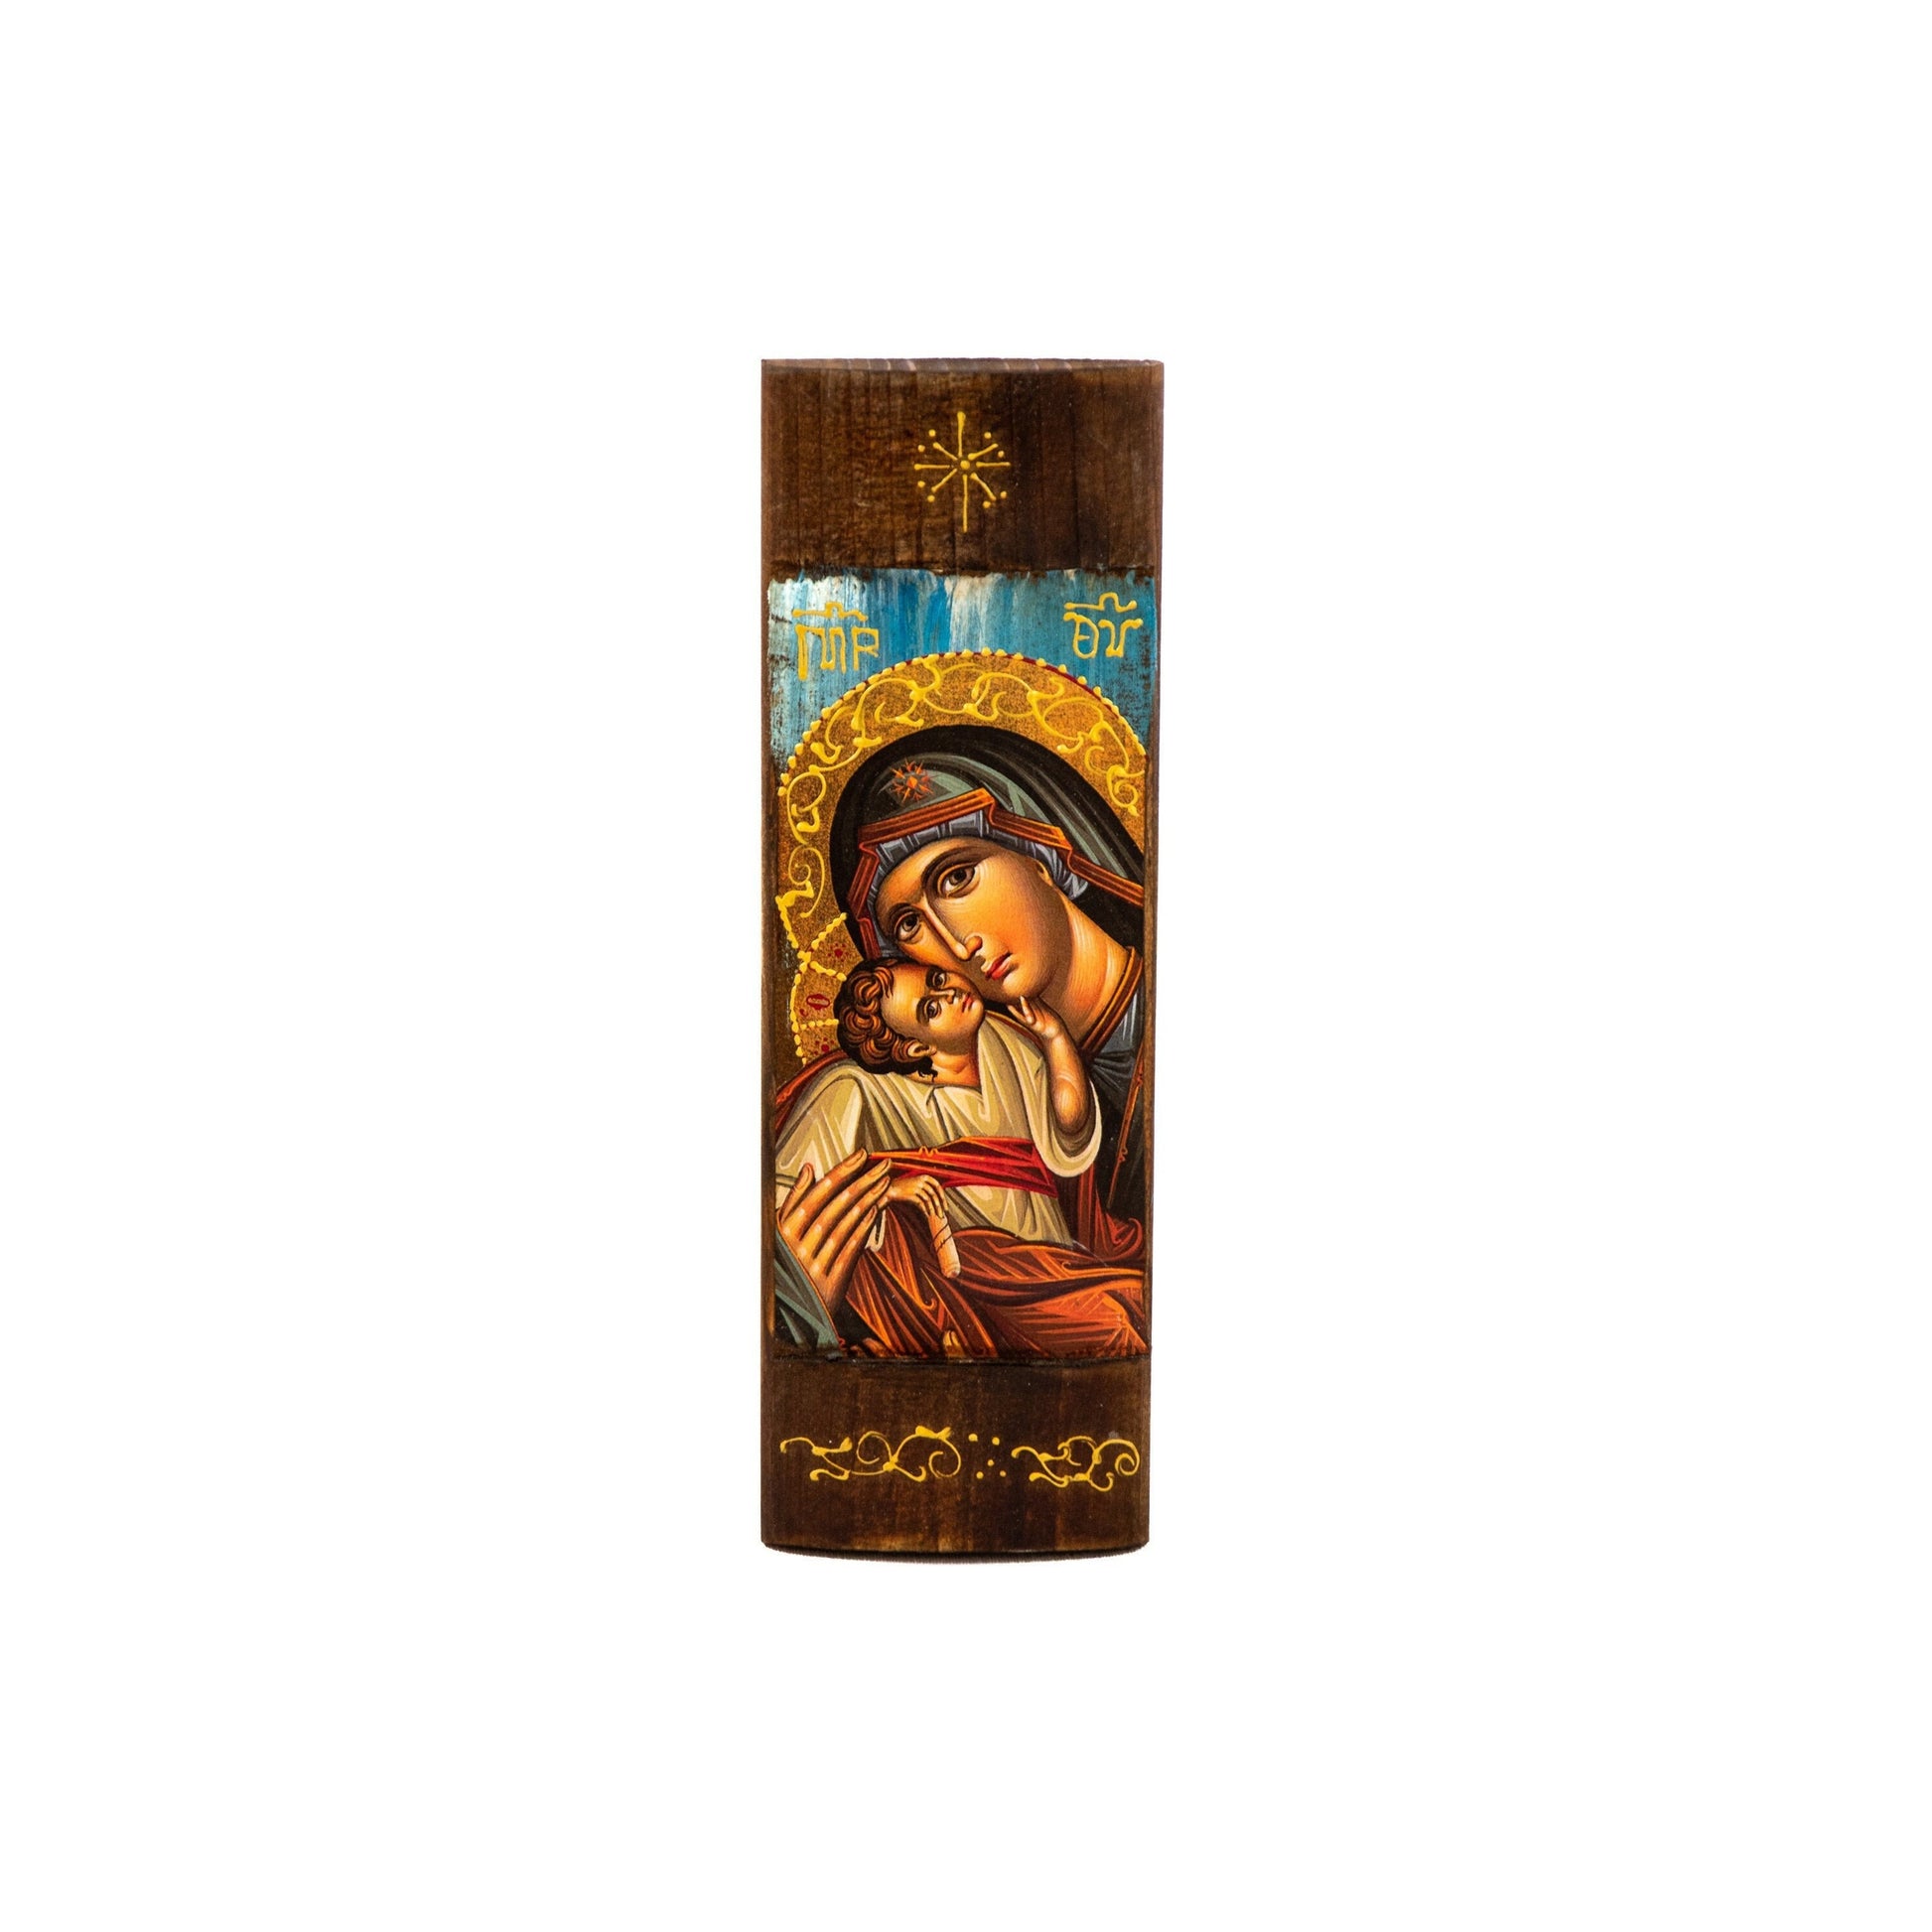 Virgin Mary icon Panagia, Handmade Greek Orthodox icon Theotokos, Mother of God Byzantine art wall hanging wood plaque, religious decor TheHolyArt